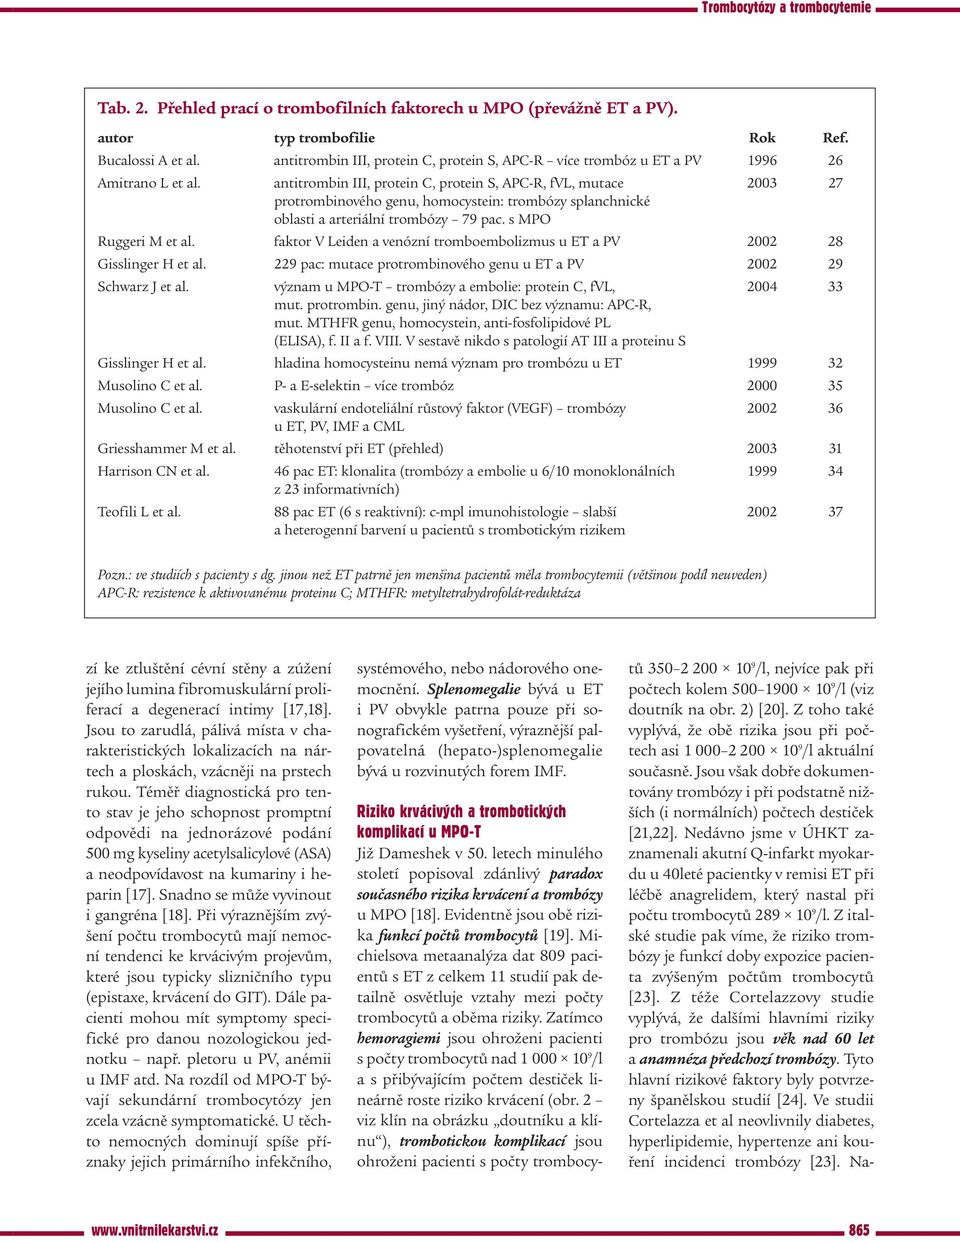 antitrombin III, protein C, protein S, APC-R, fvl, mutace 2003 27 protrombinového genu, homocystein: trombózy splanchnické oblasti a arteriální trombózy 79 pac. s MPO Ruggeri M et al.